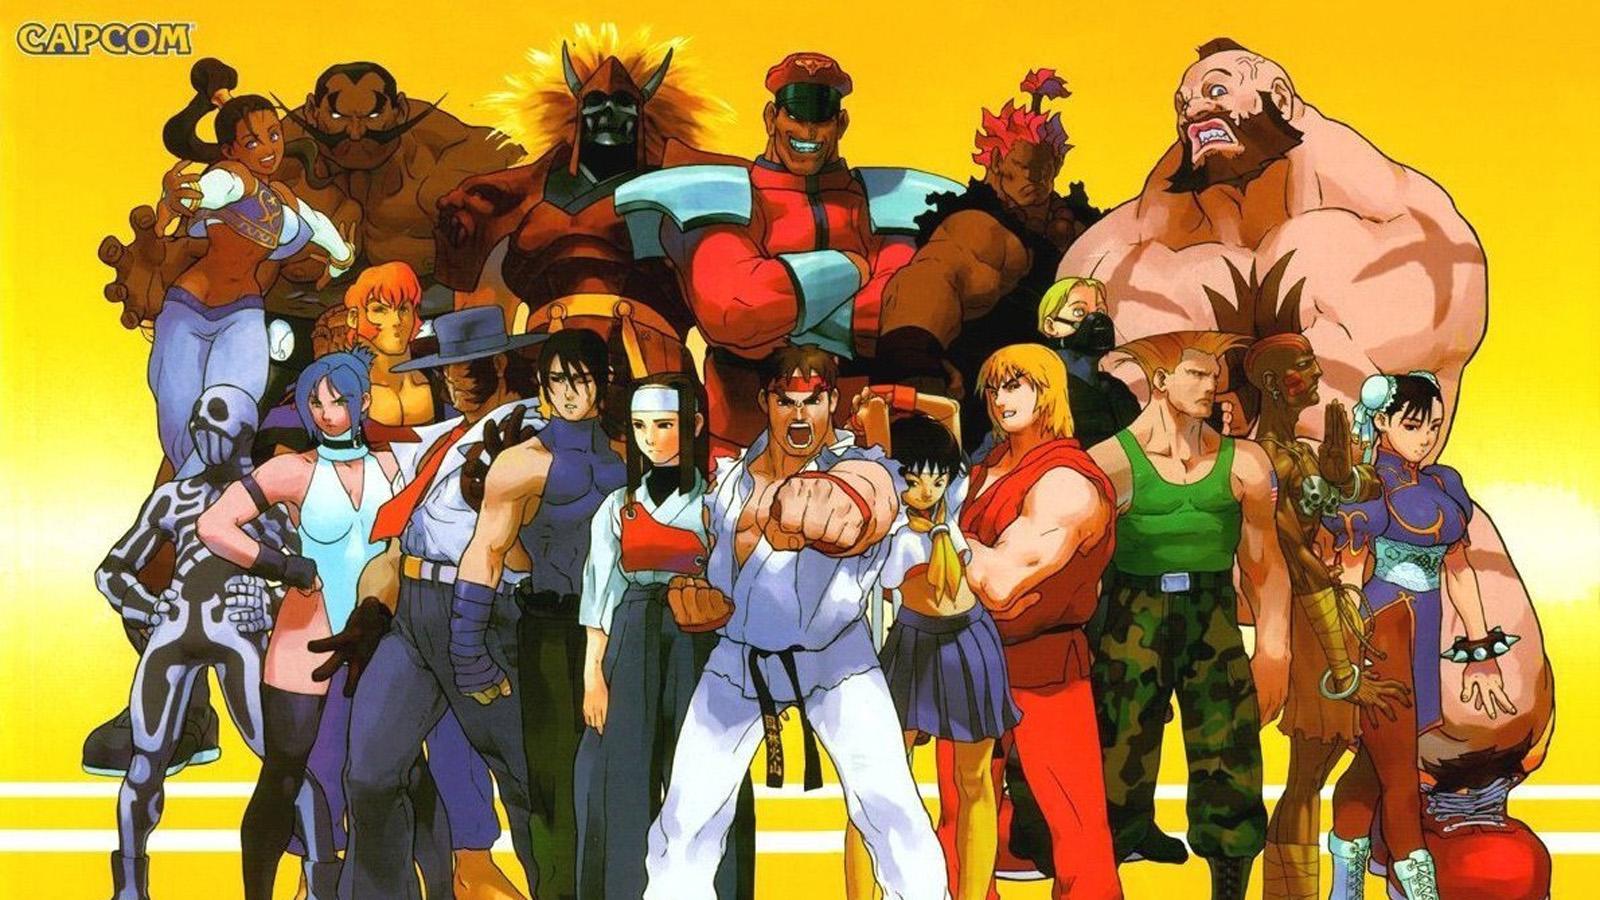 Official art for Street Fighter Ex 3